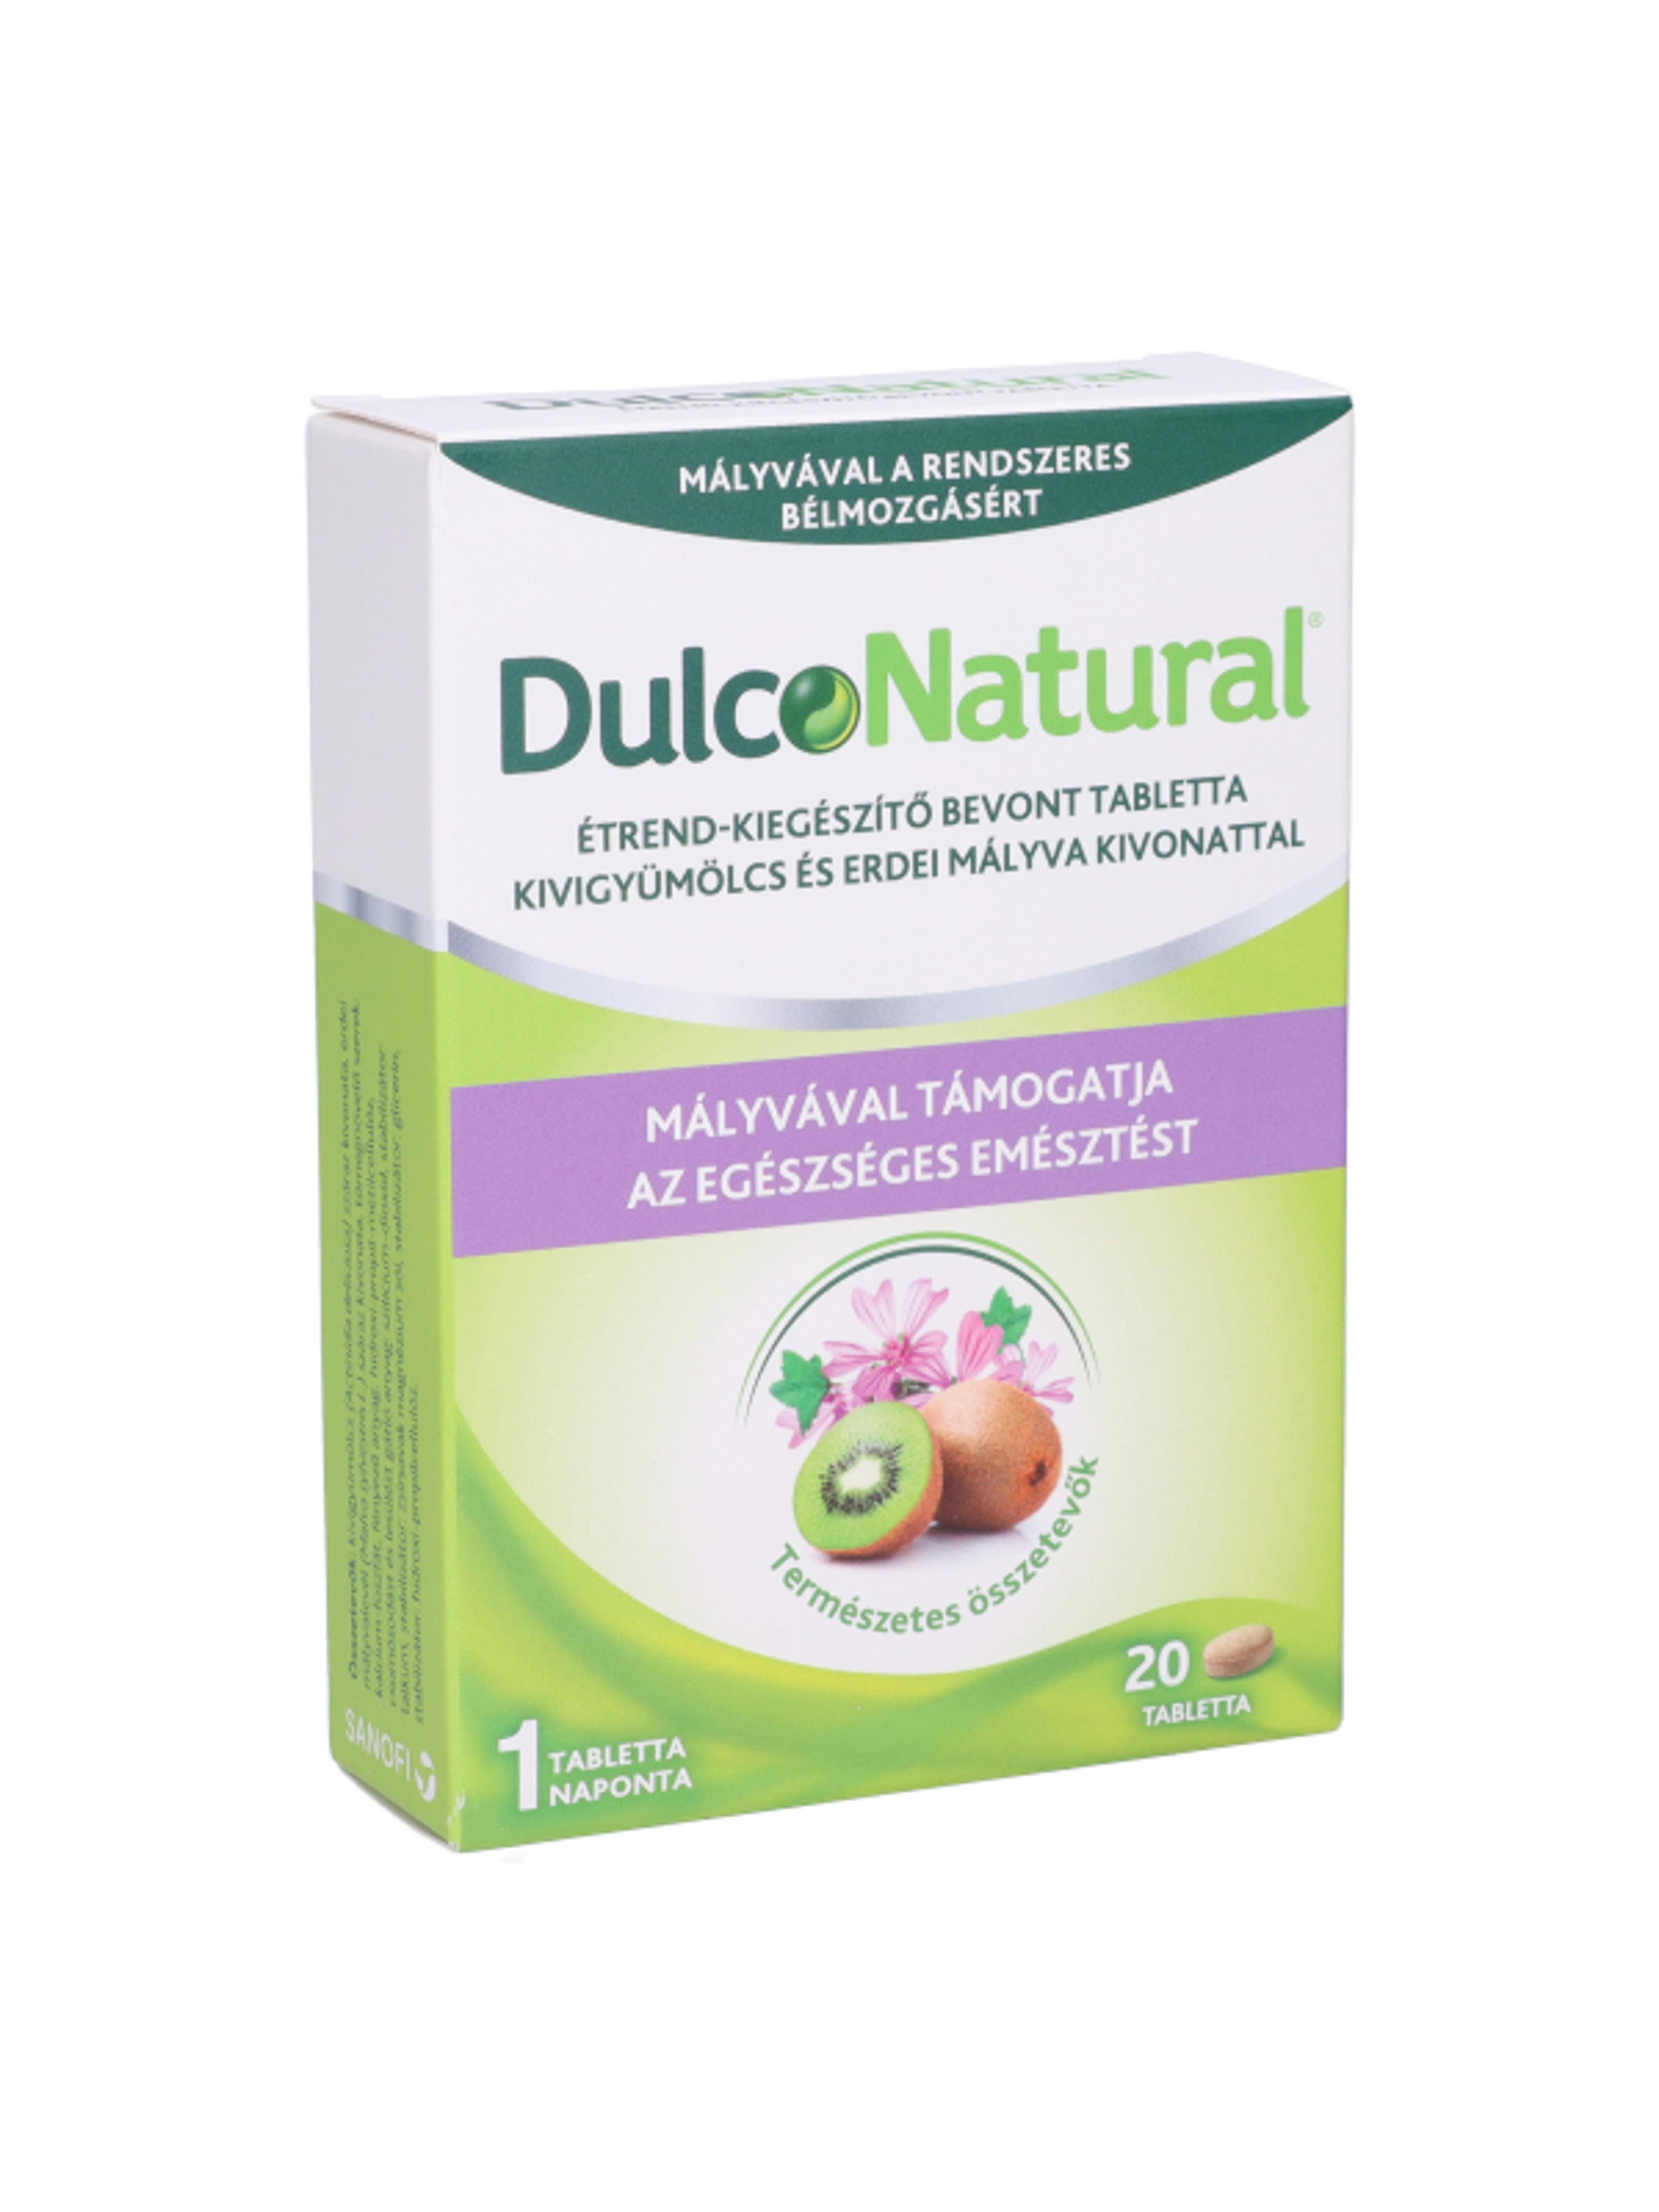 Dulconatural étrend-kiegészítő tabletta - 20 db-1